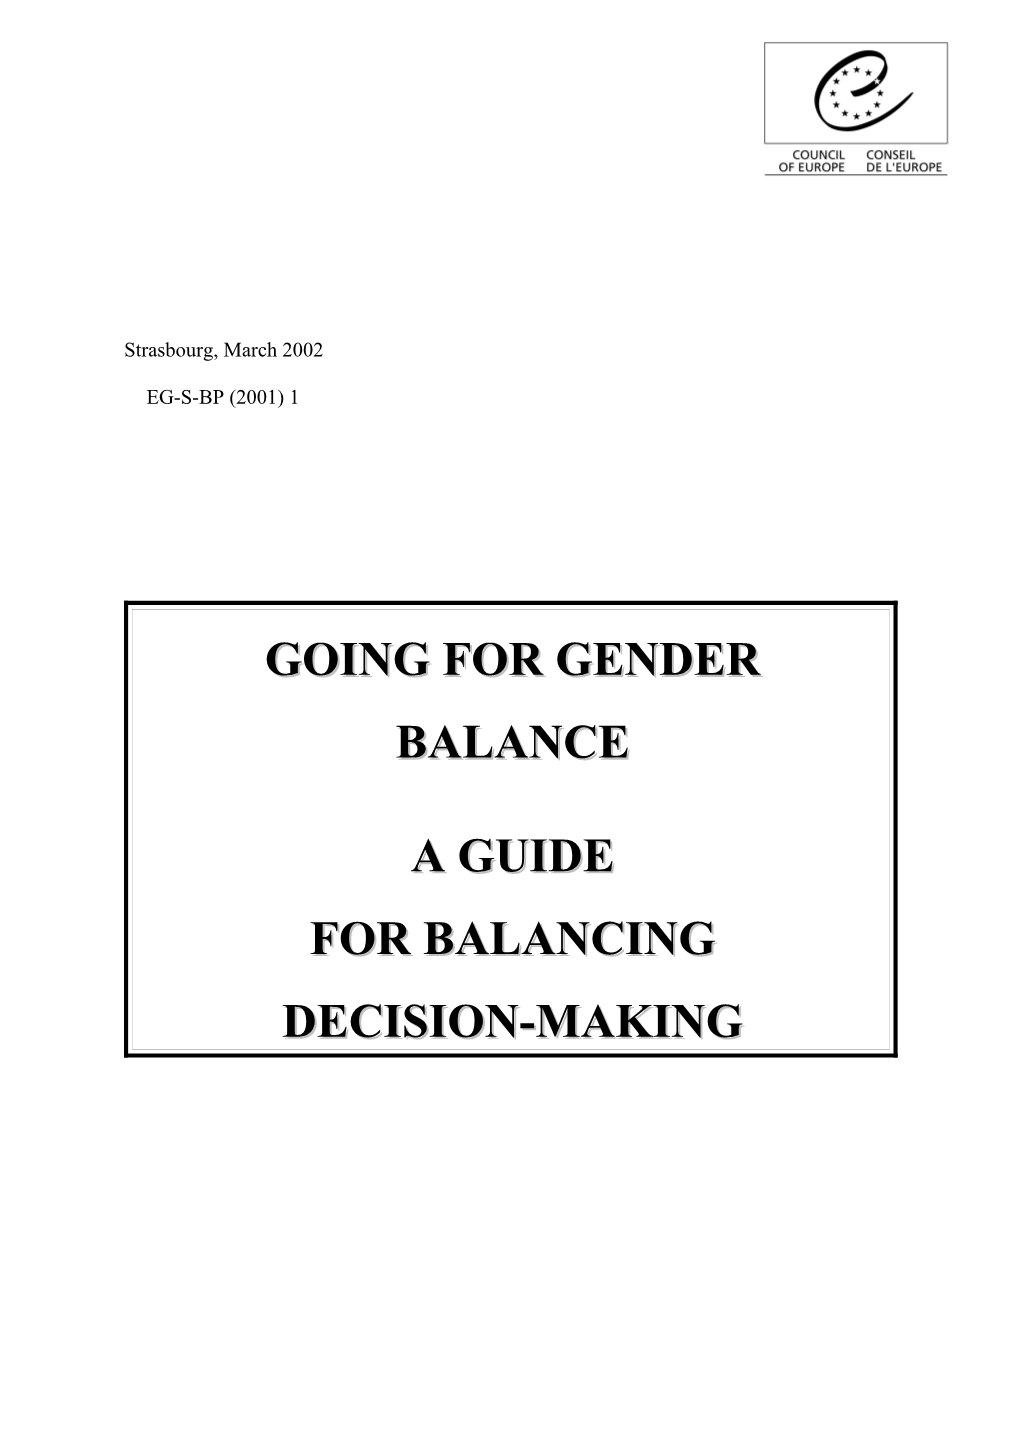 Going for Gender Balance